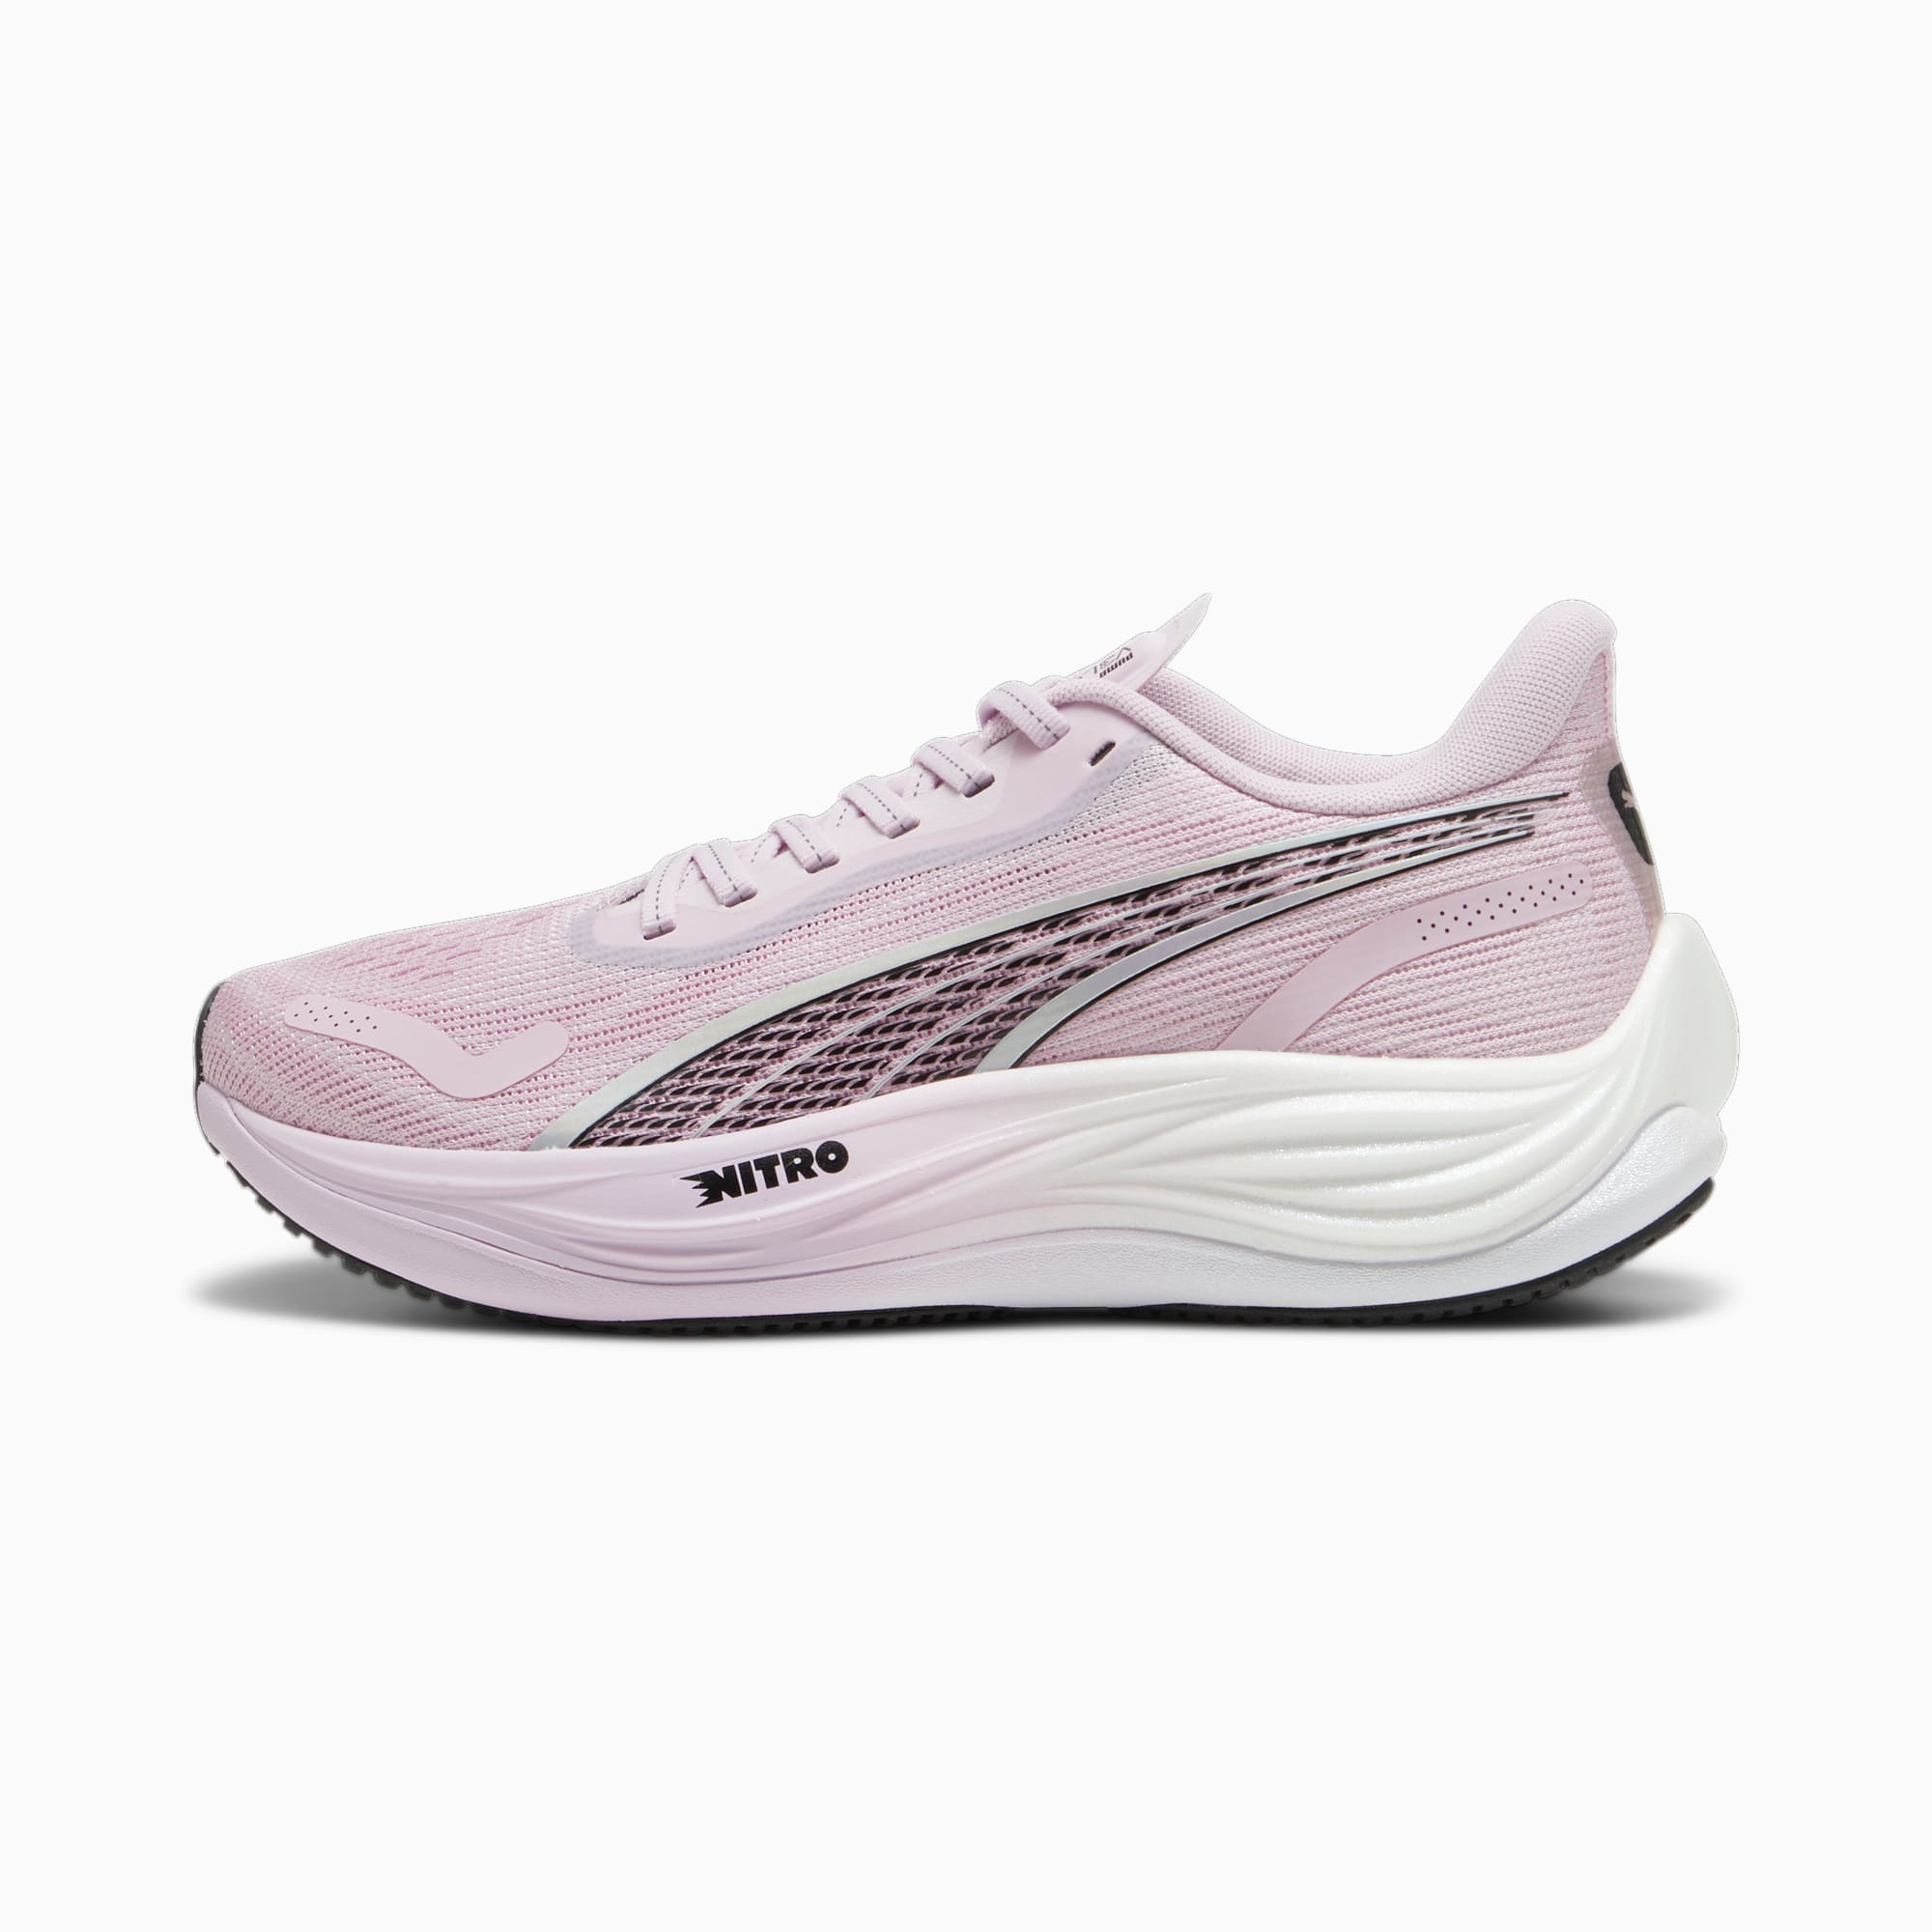 PUMA Velocity Nitroâ¢ 3 Women's Running Shoes